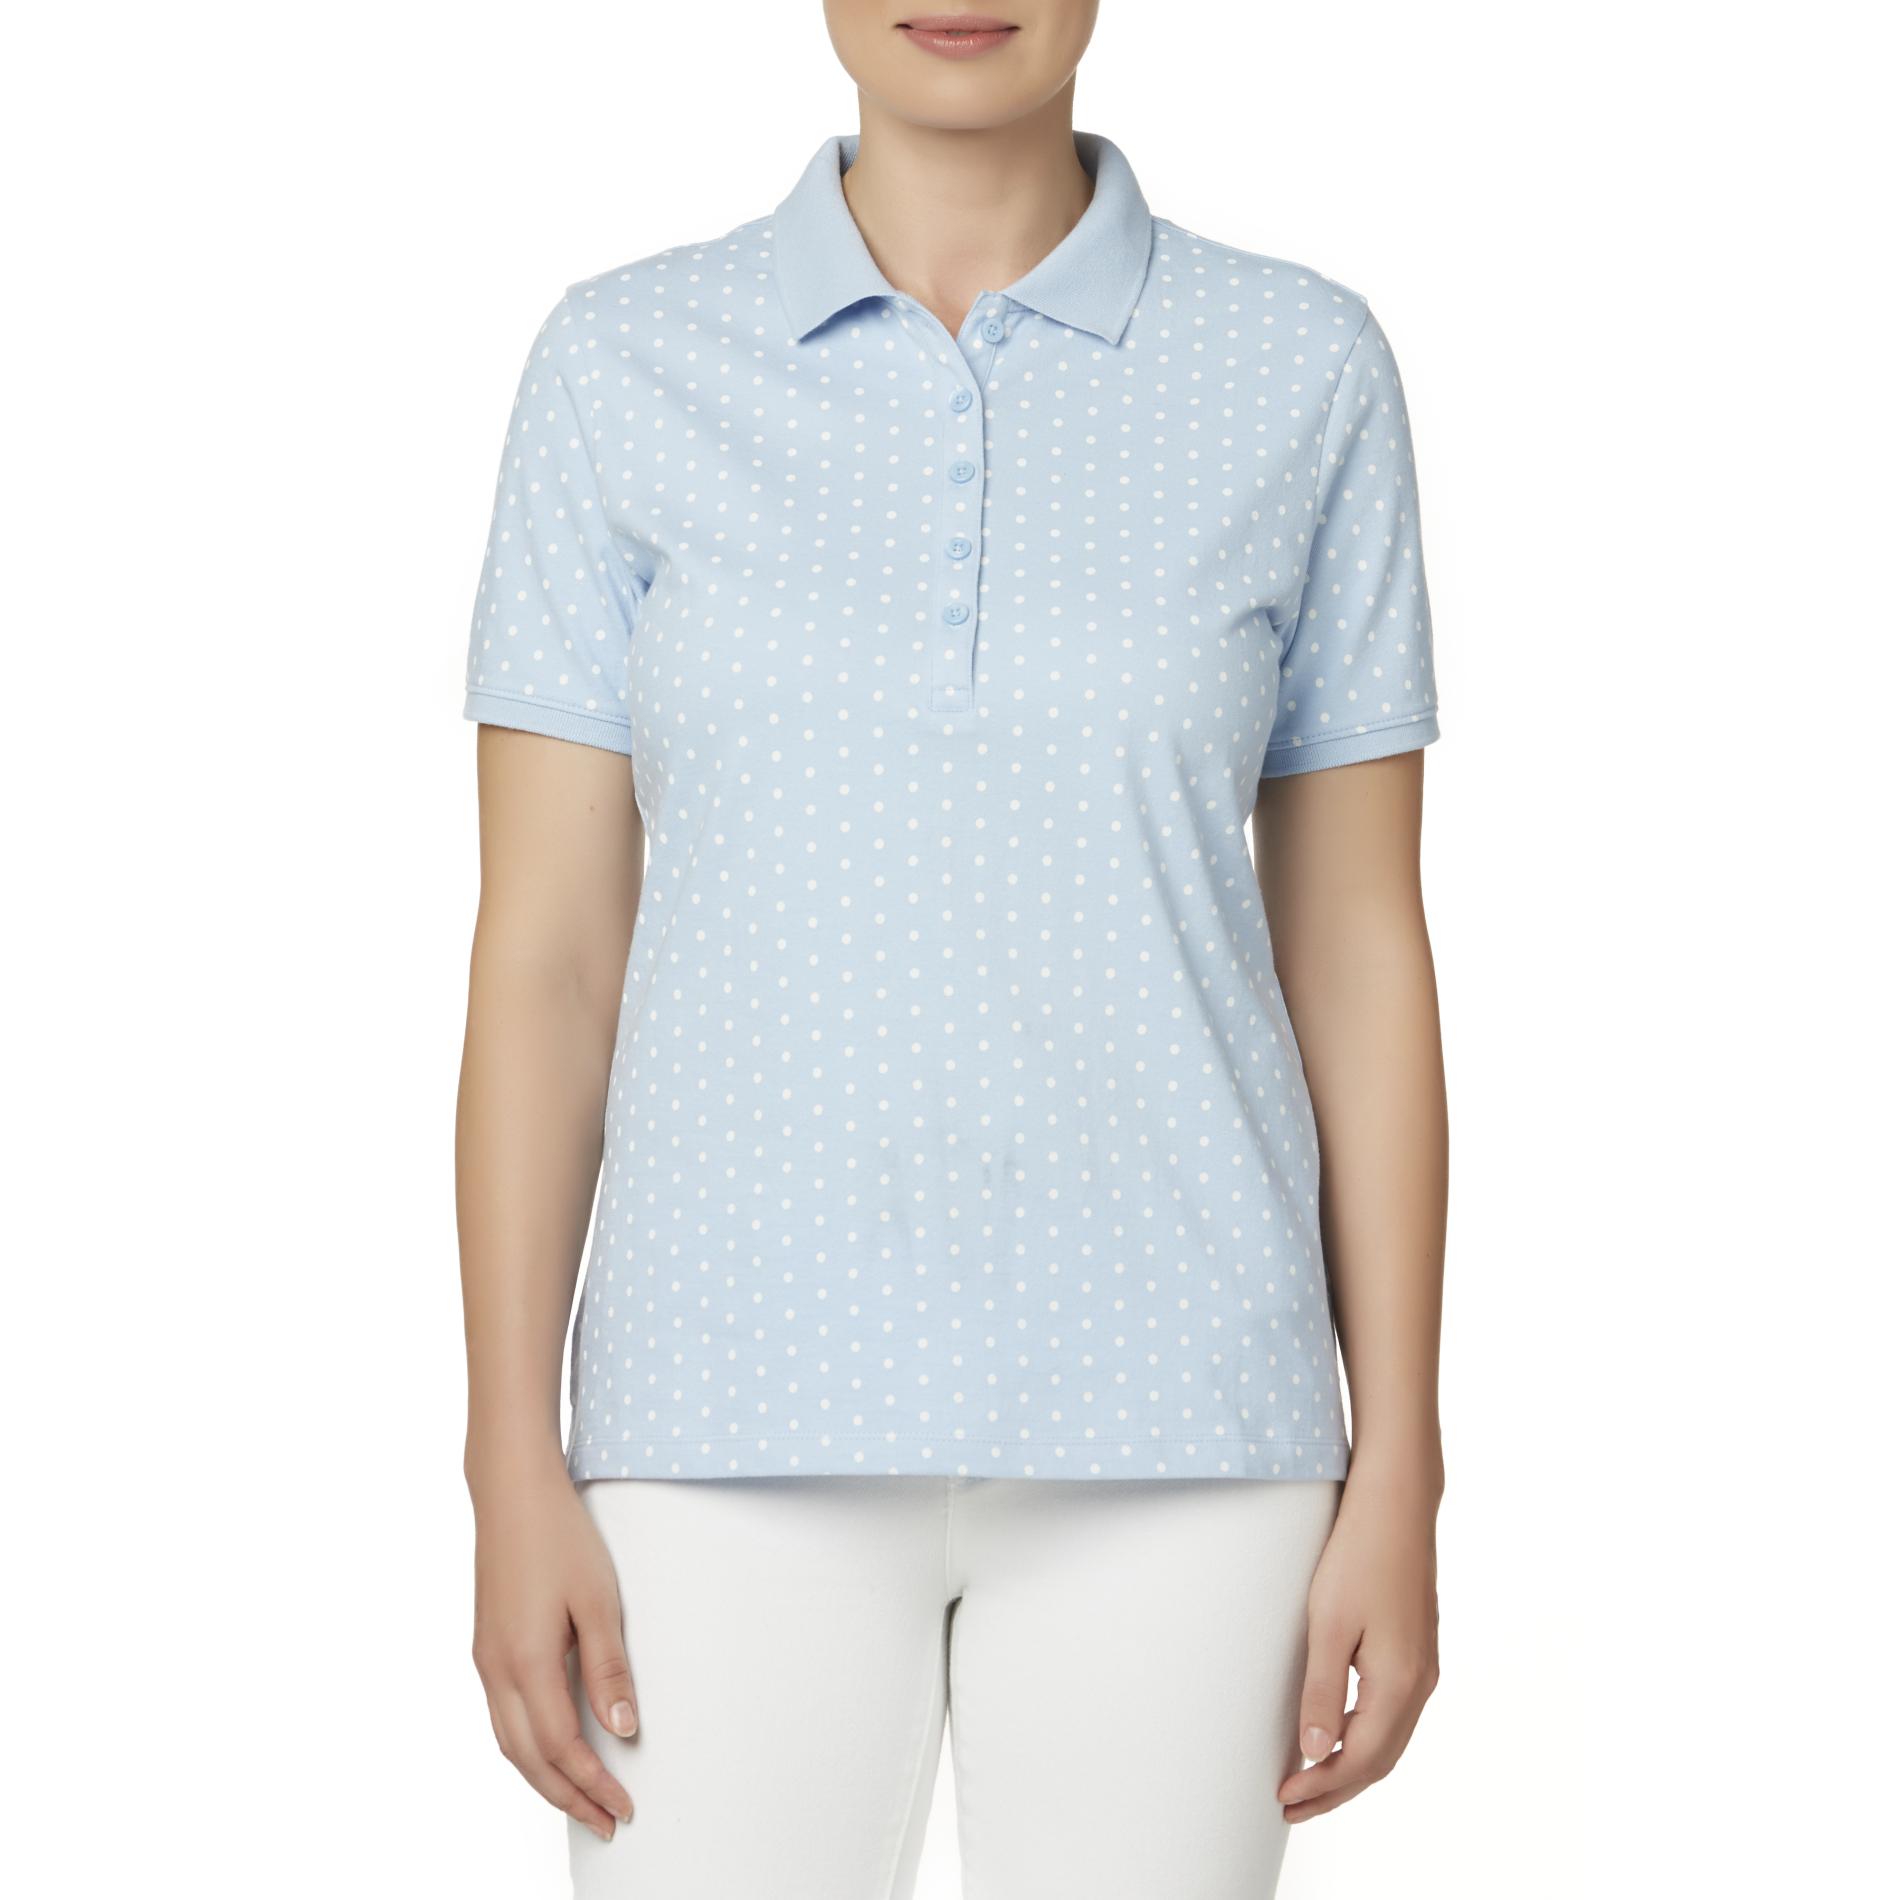 Laura Scott Women's Polo Shirt - Polka Dot